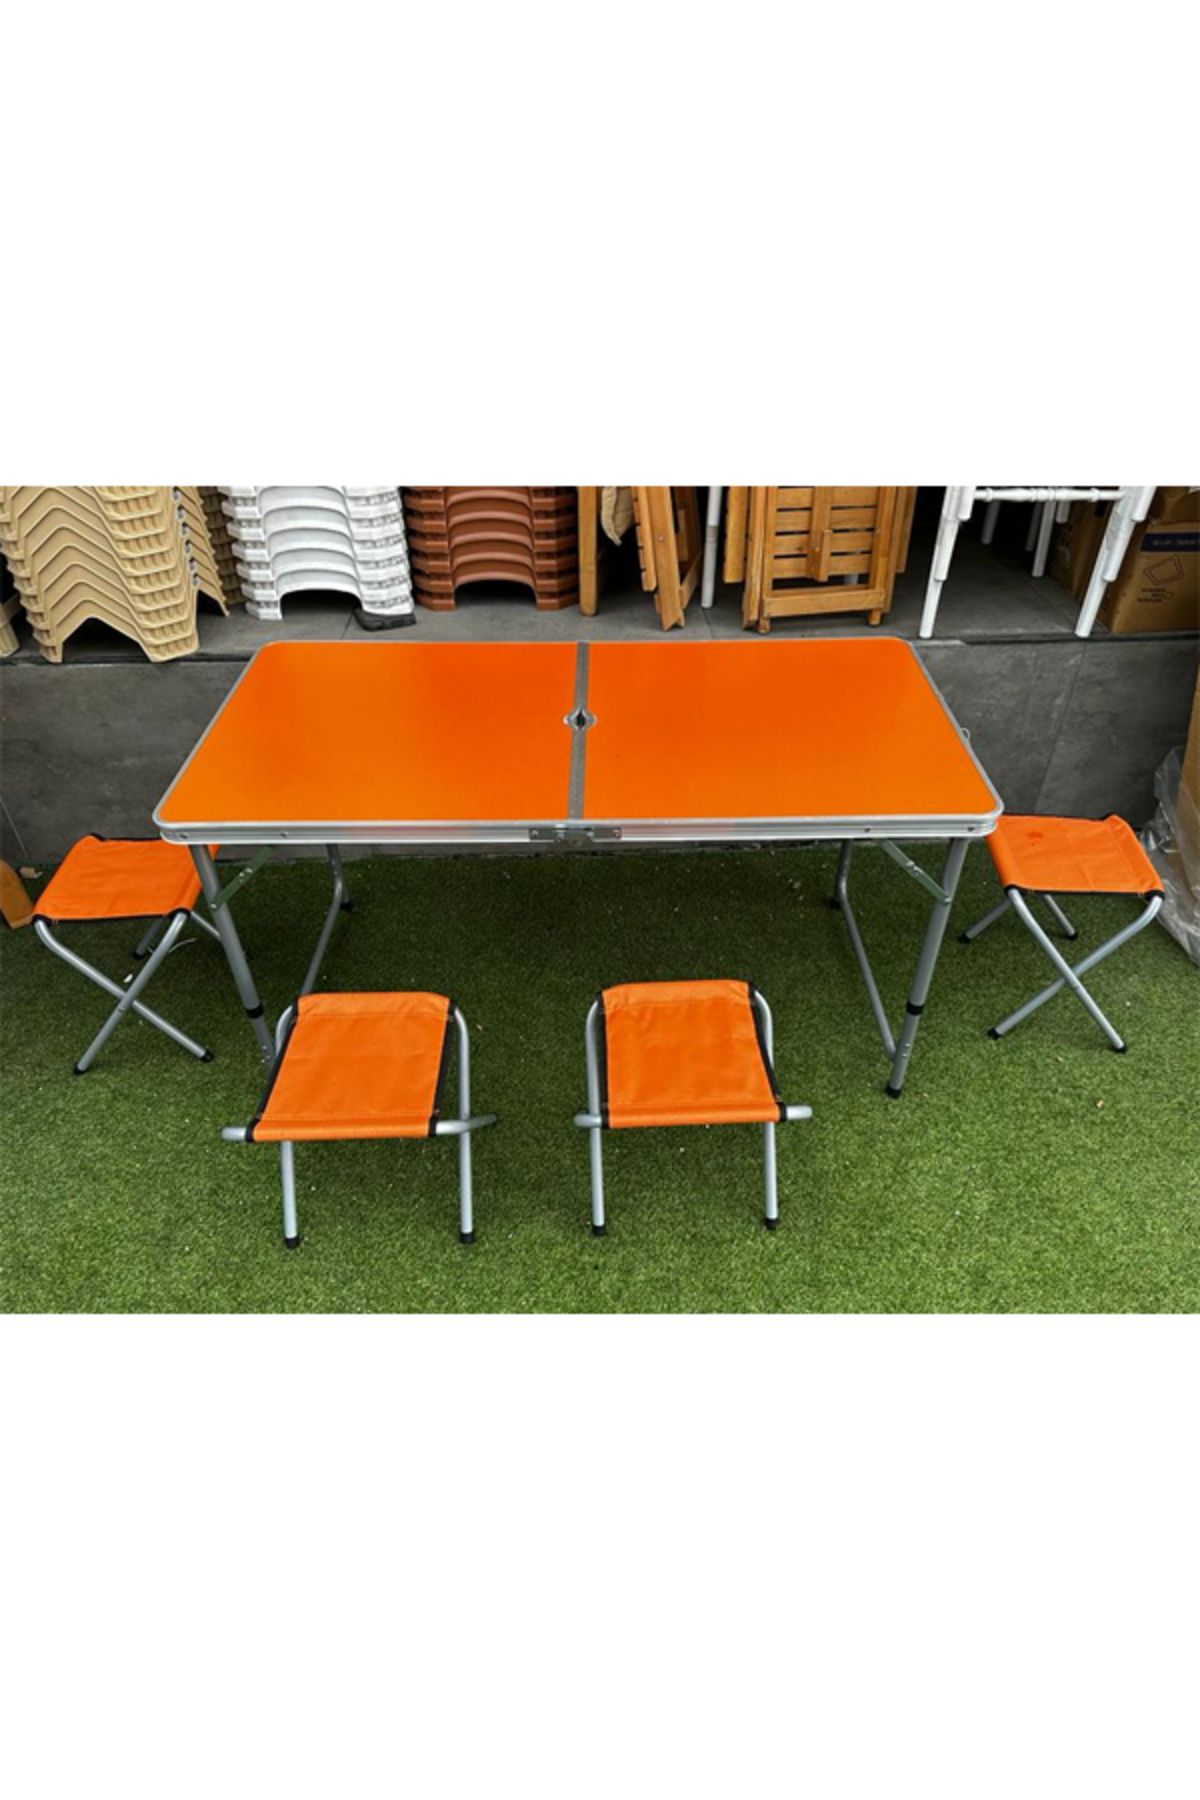 Ustoll Furniture Katlanır Piknik/Kamp Masası Seti Çanta Tipi